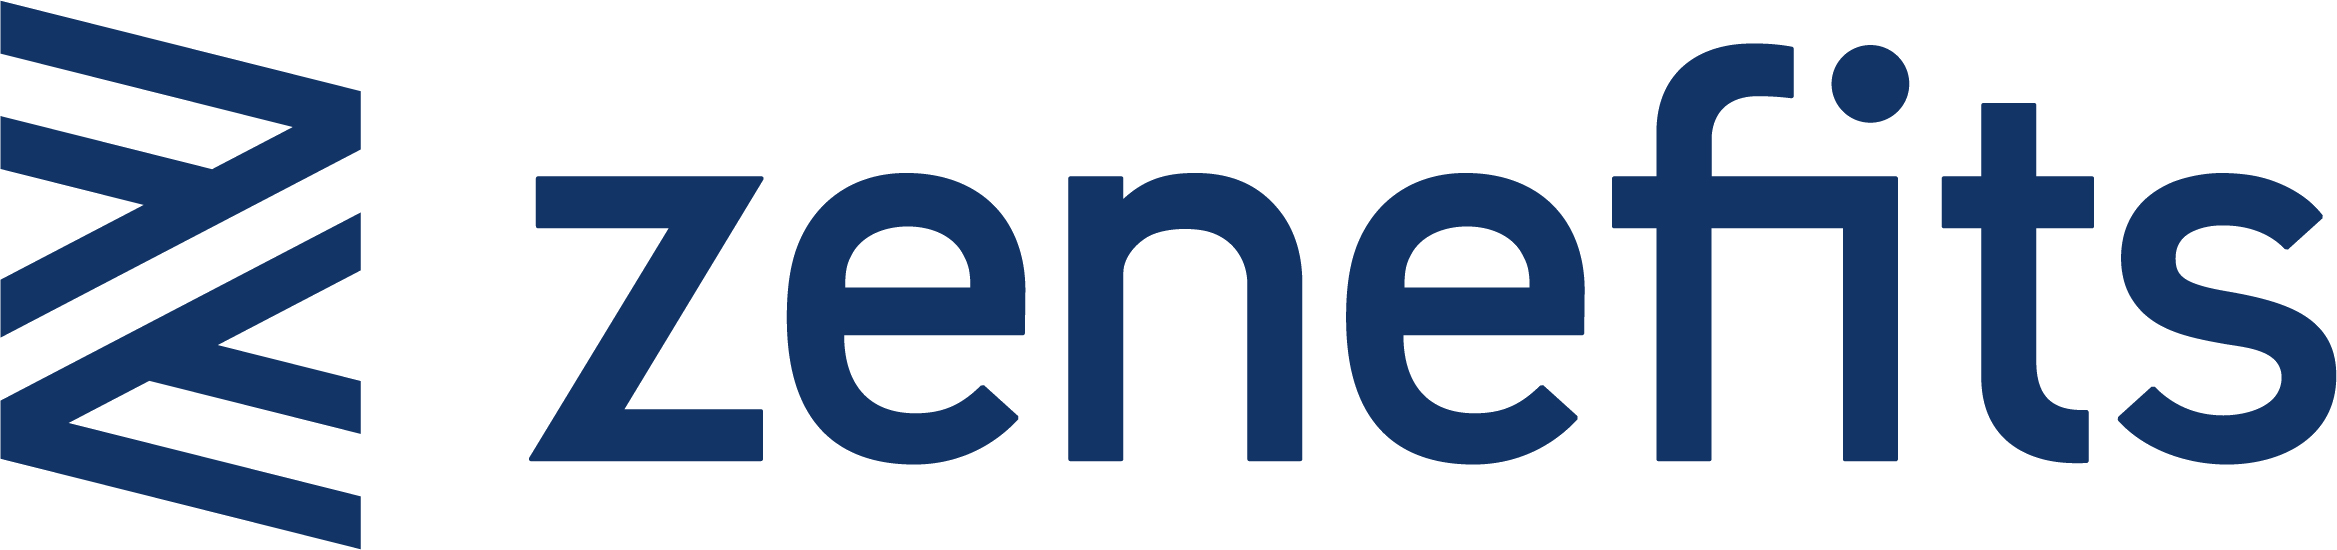 Zenefits Logo for active job listings